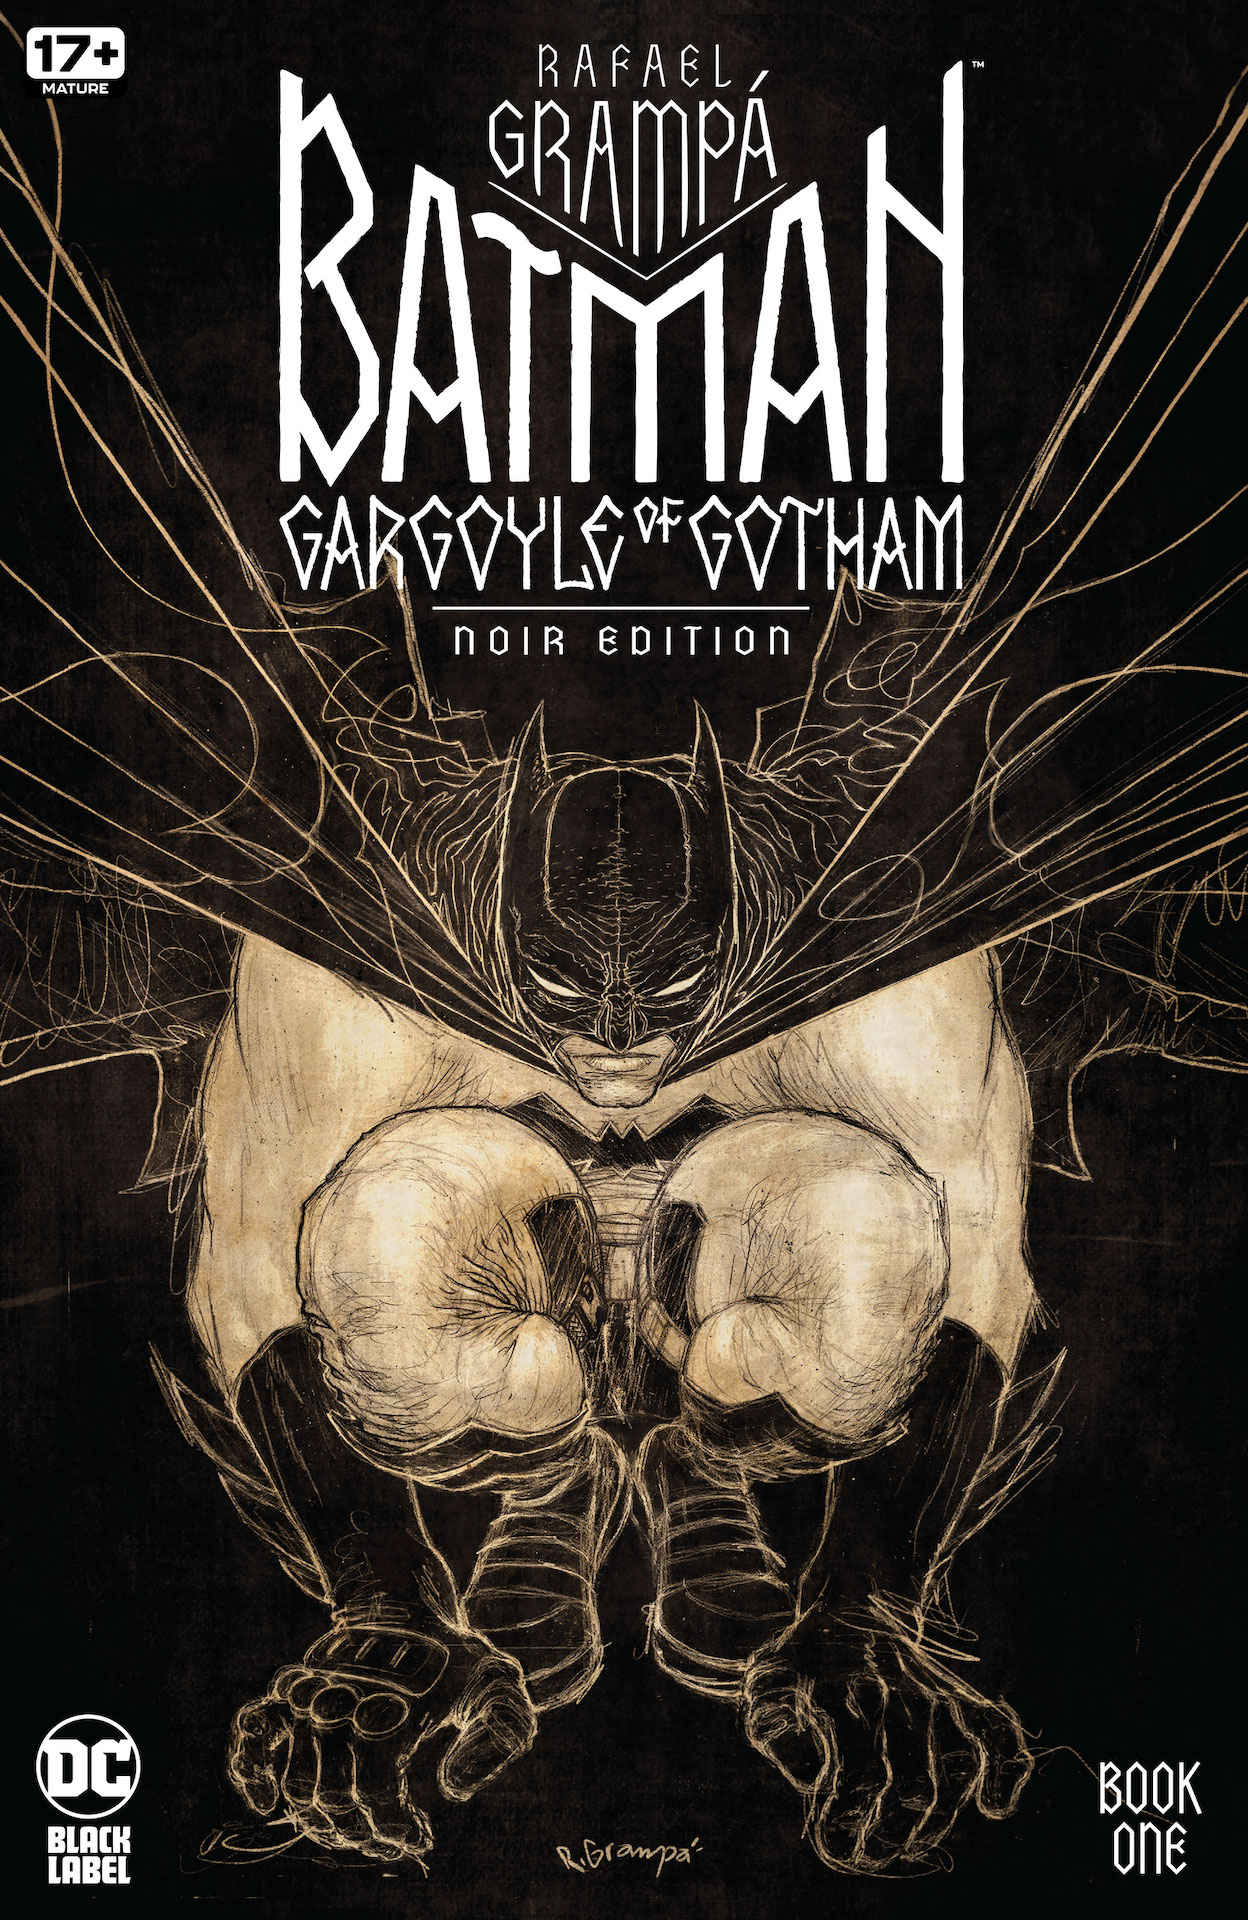 DC Preview: Batman: Gargoyle of Gotham #1 (Noir Edition)